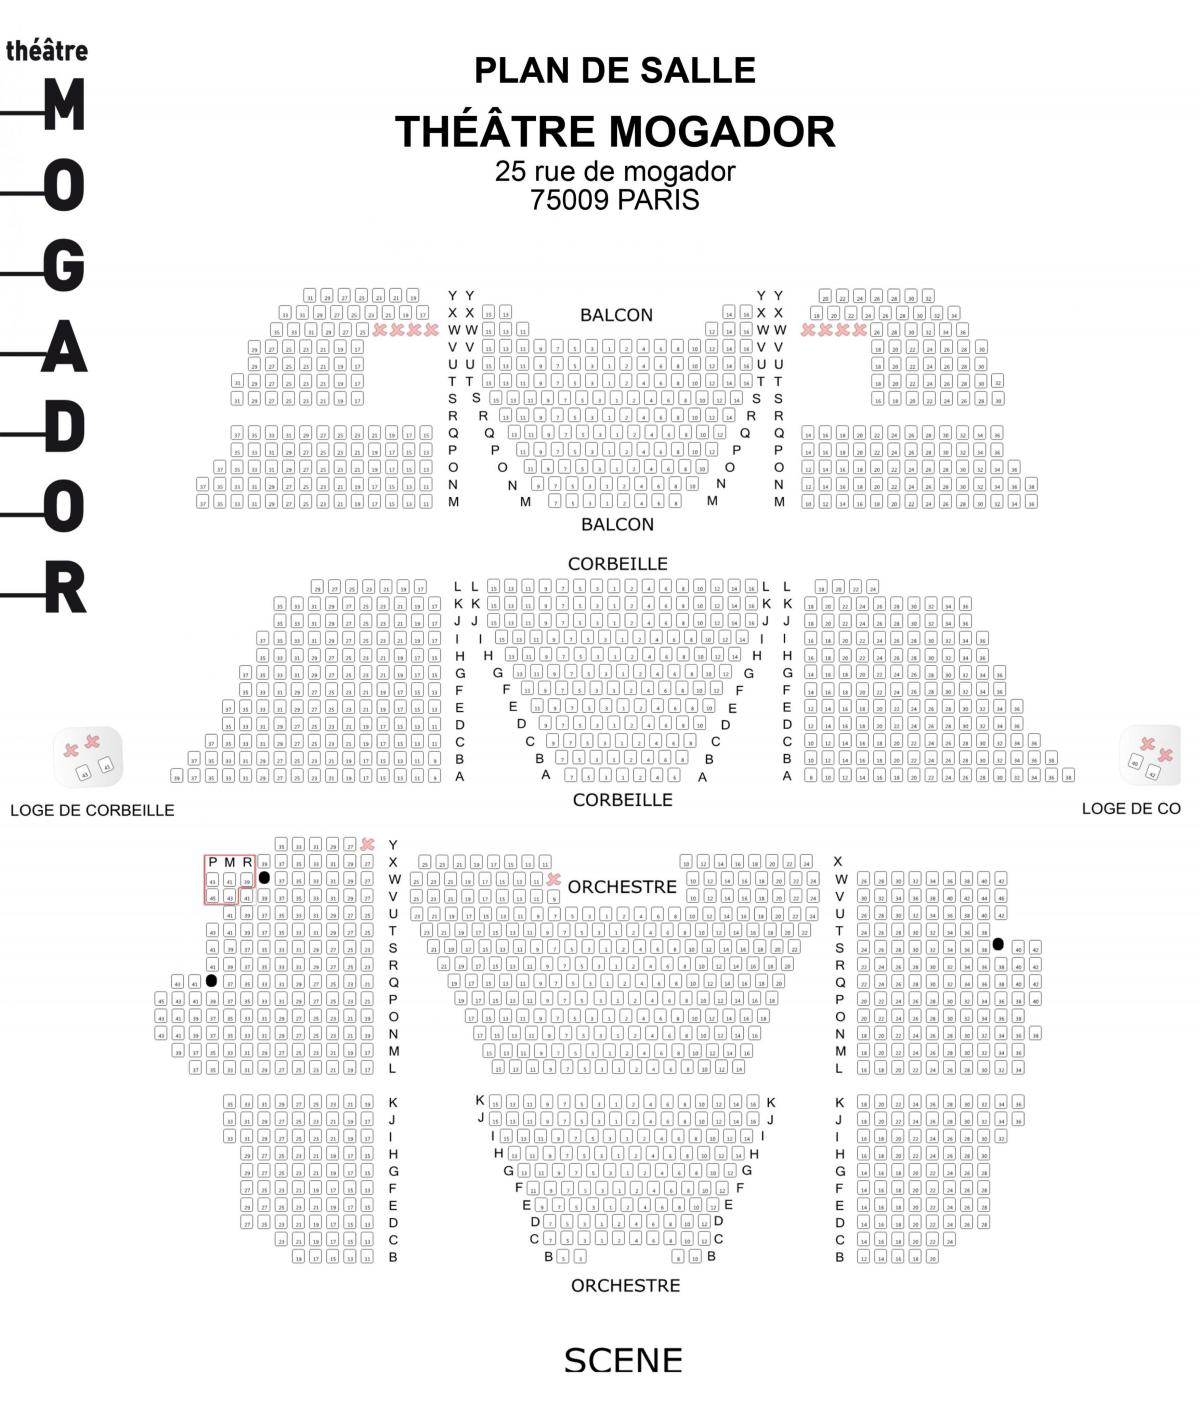 خريطة مسرح موغادور